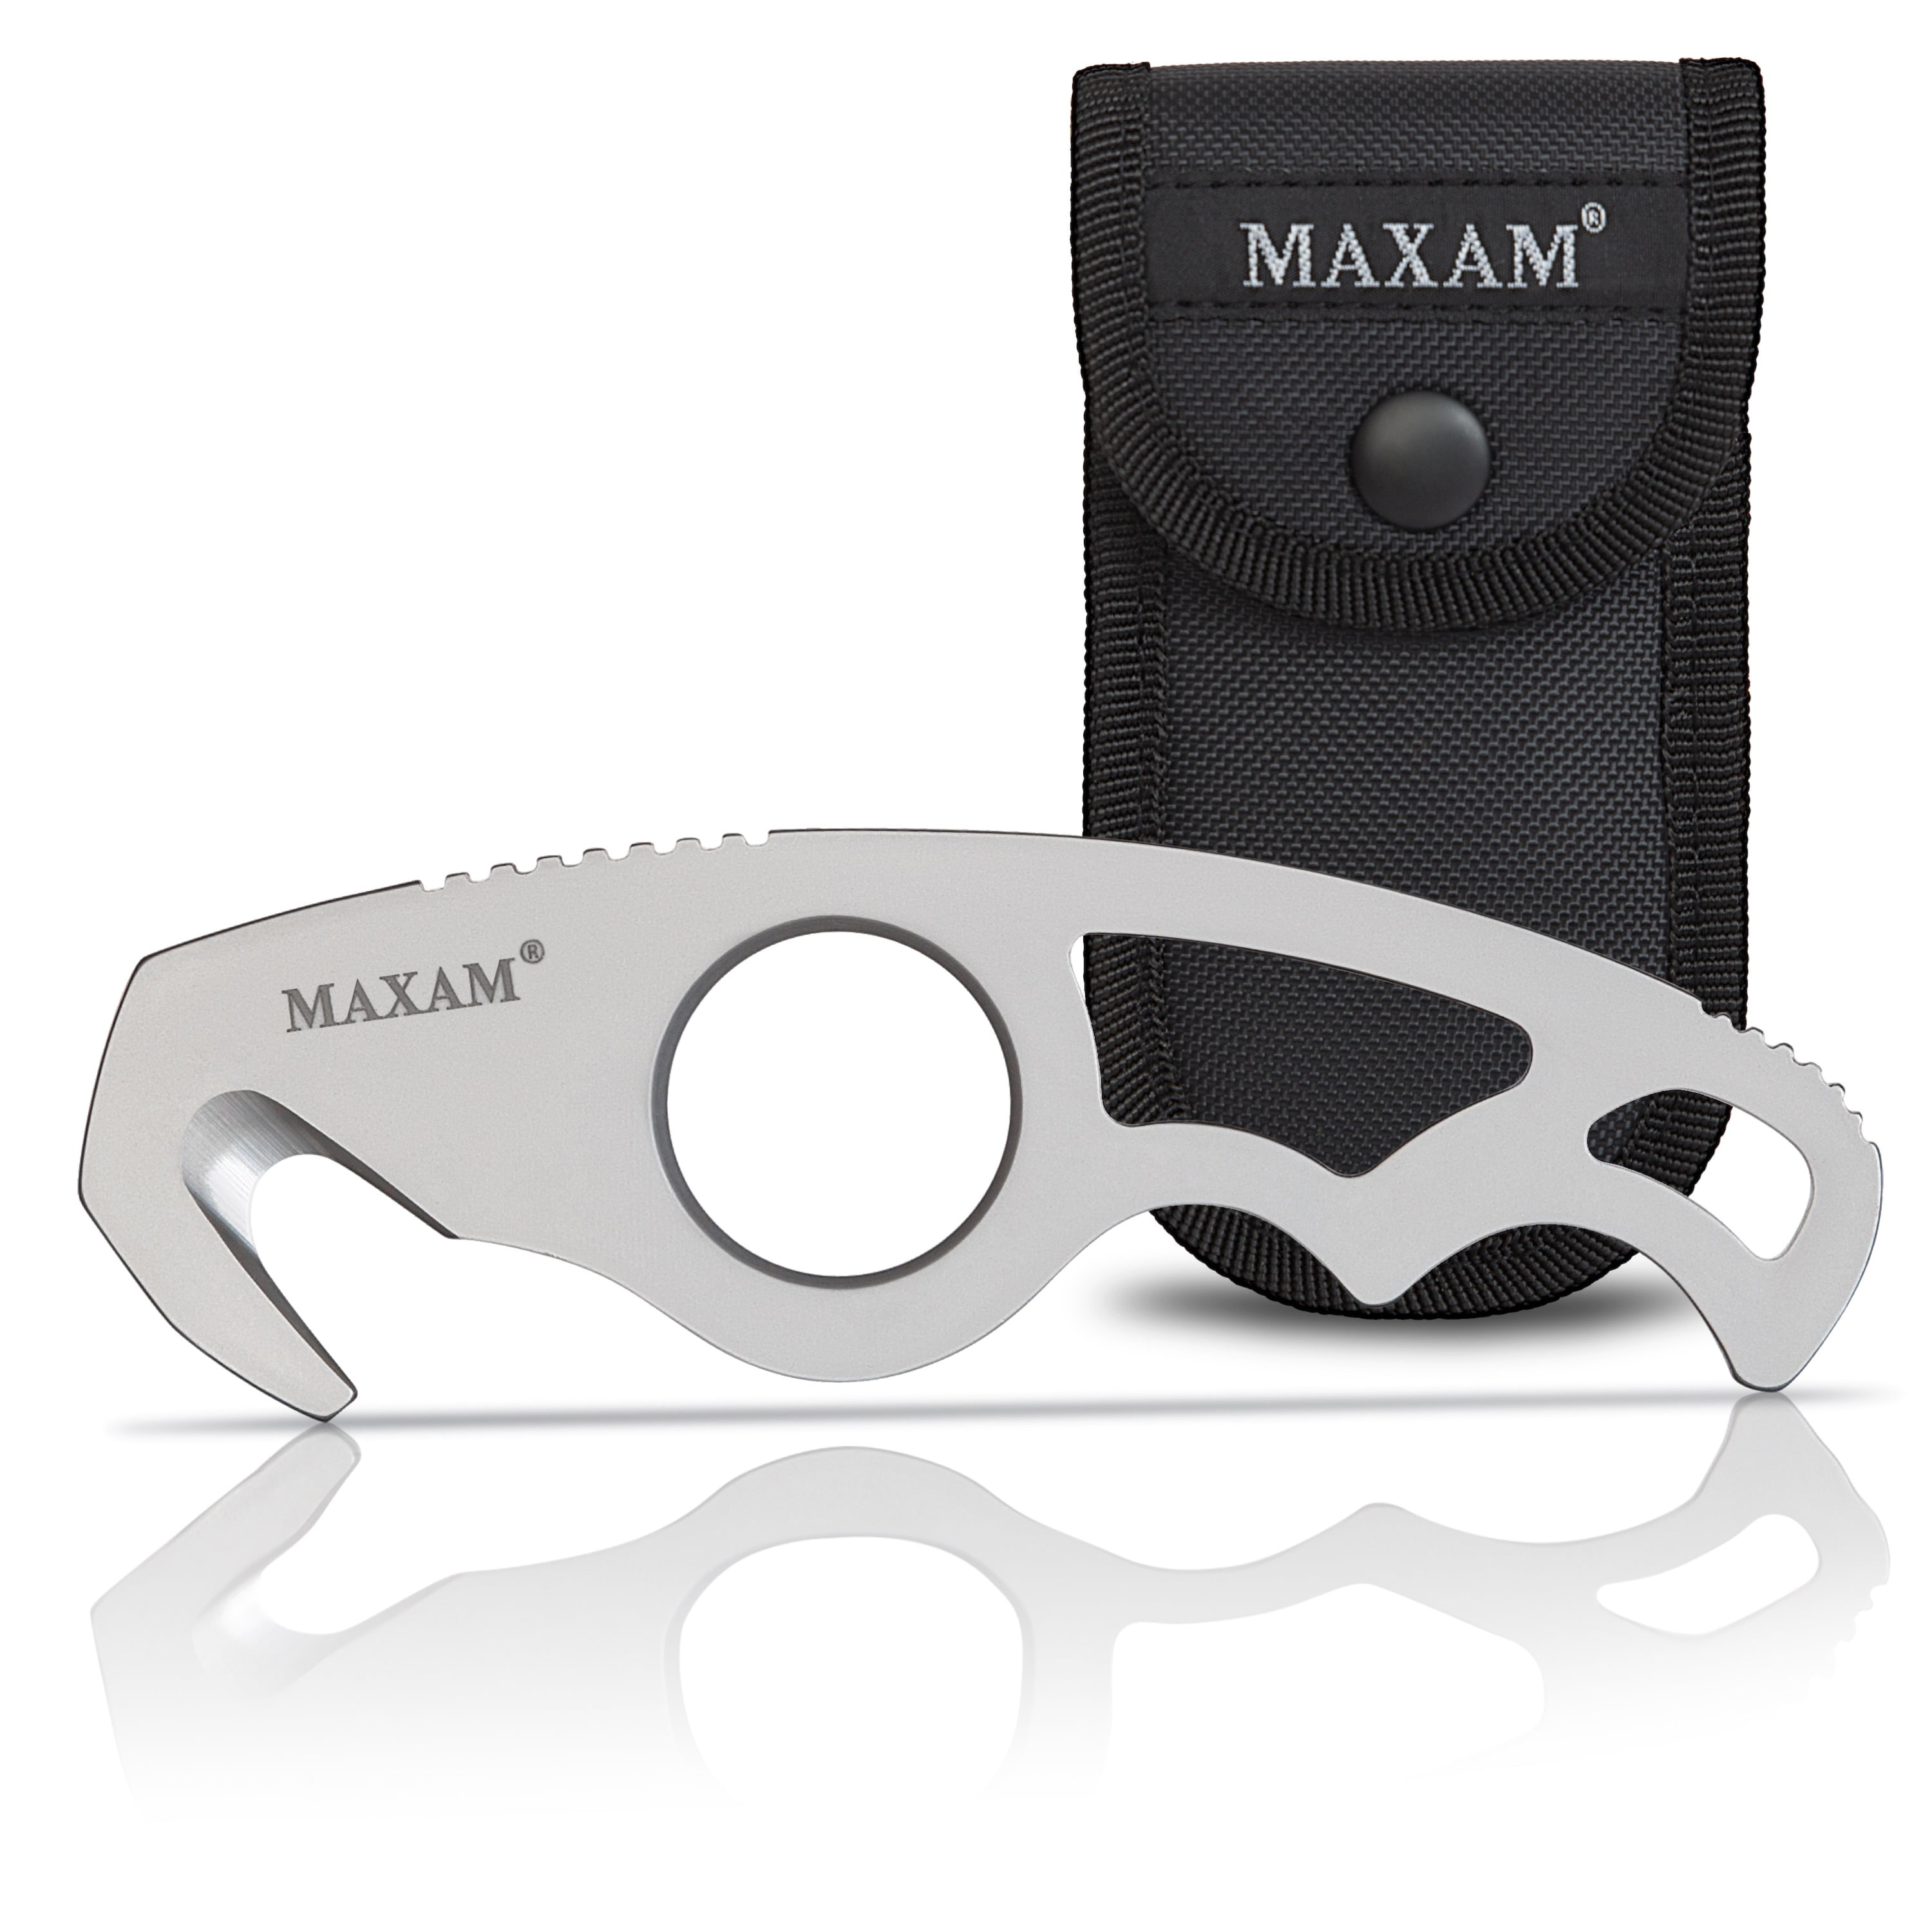 Maxam Gut Hook & Sheath - Hunting Knife - Stainless Steel Blade